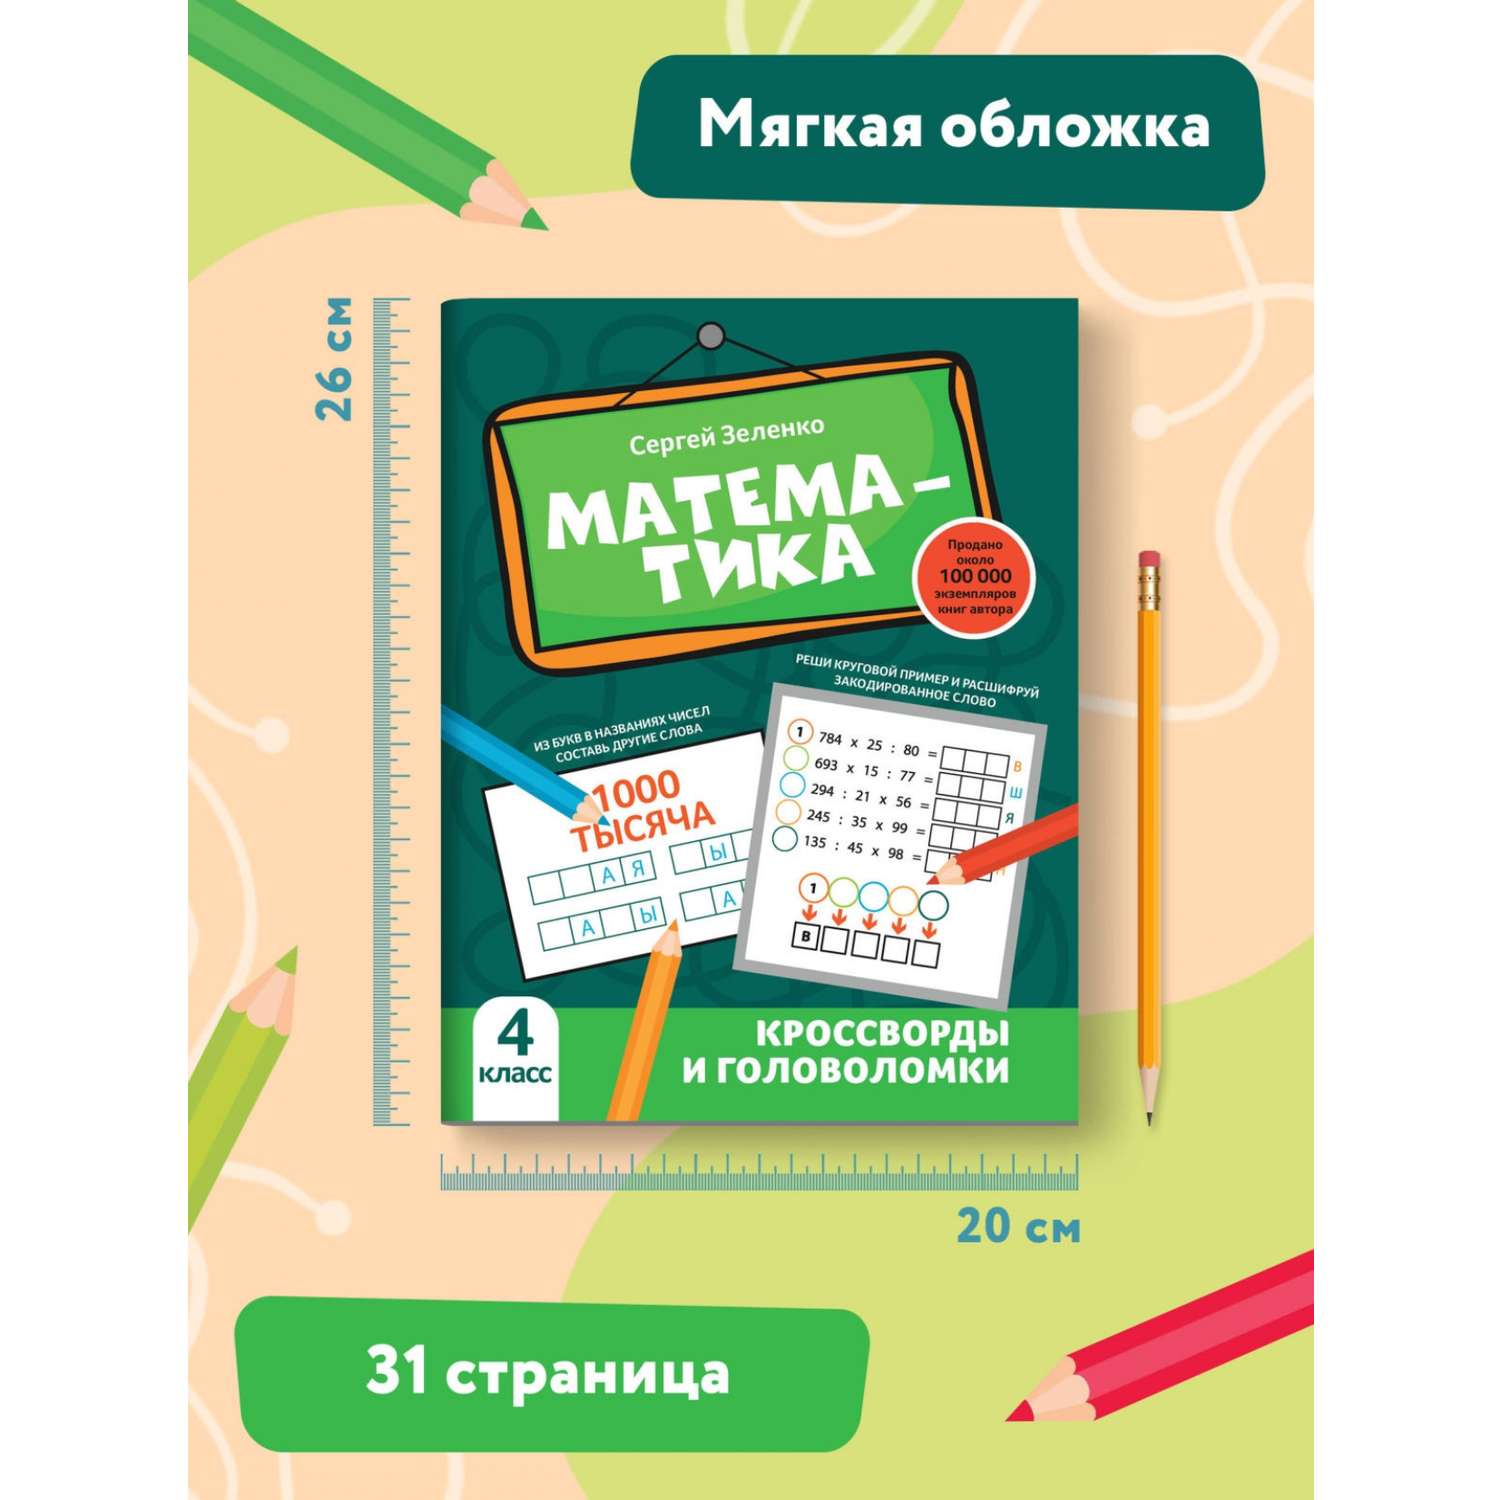 Книга Феникс Математика: кроссворды и головоломки: 4 класс - фото 8